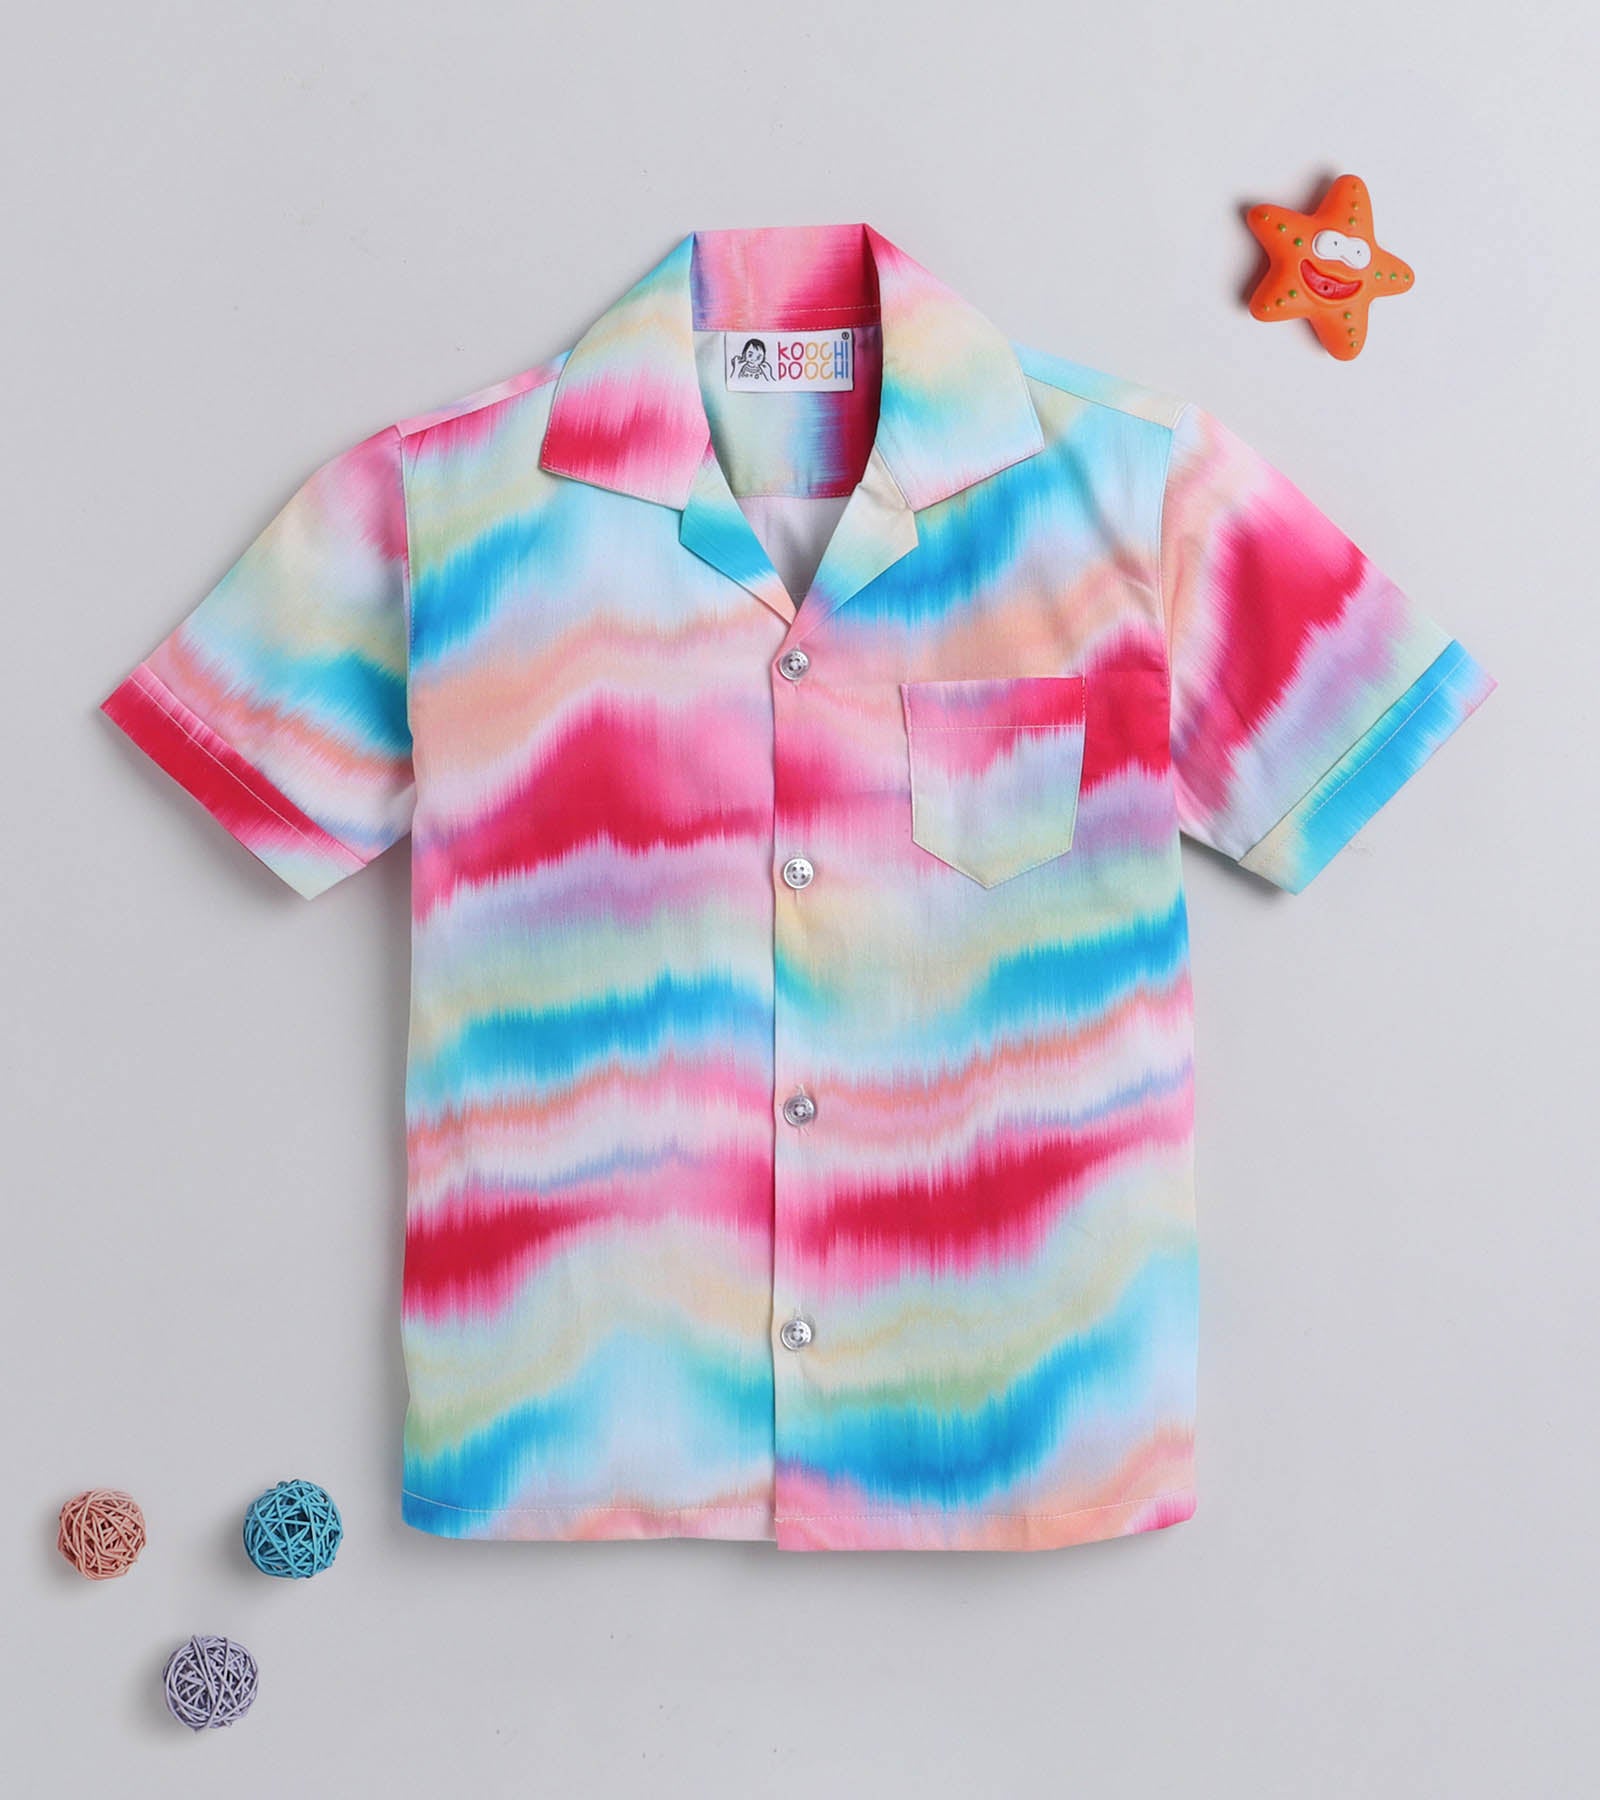 Colour Waves Digital printed Boys Shirt